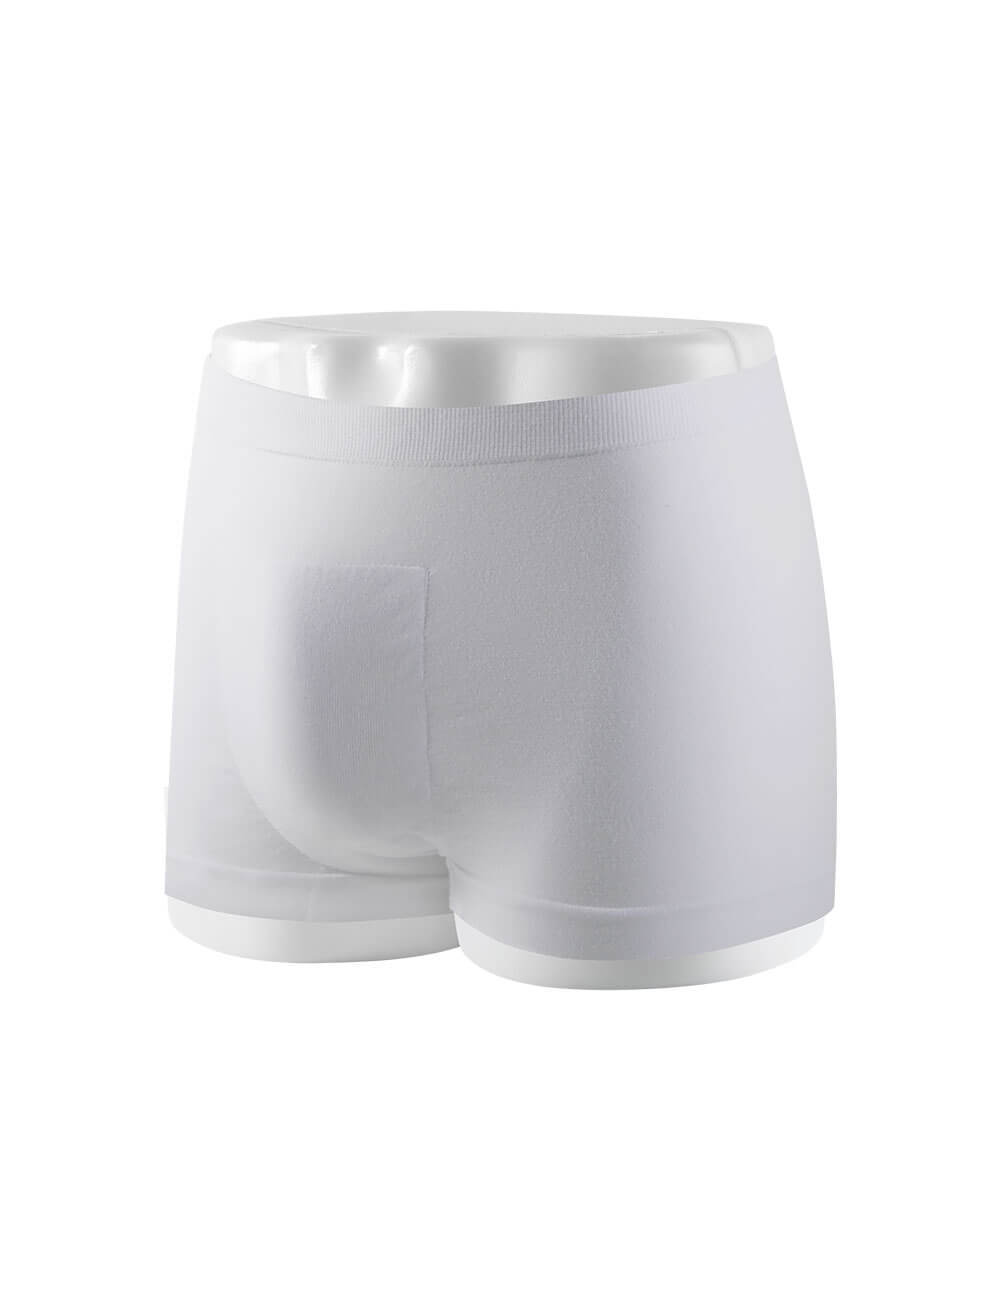 Plus Size Washable Incontinence Underwear For Mens Bladder Leak